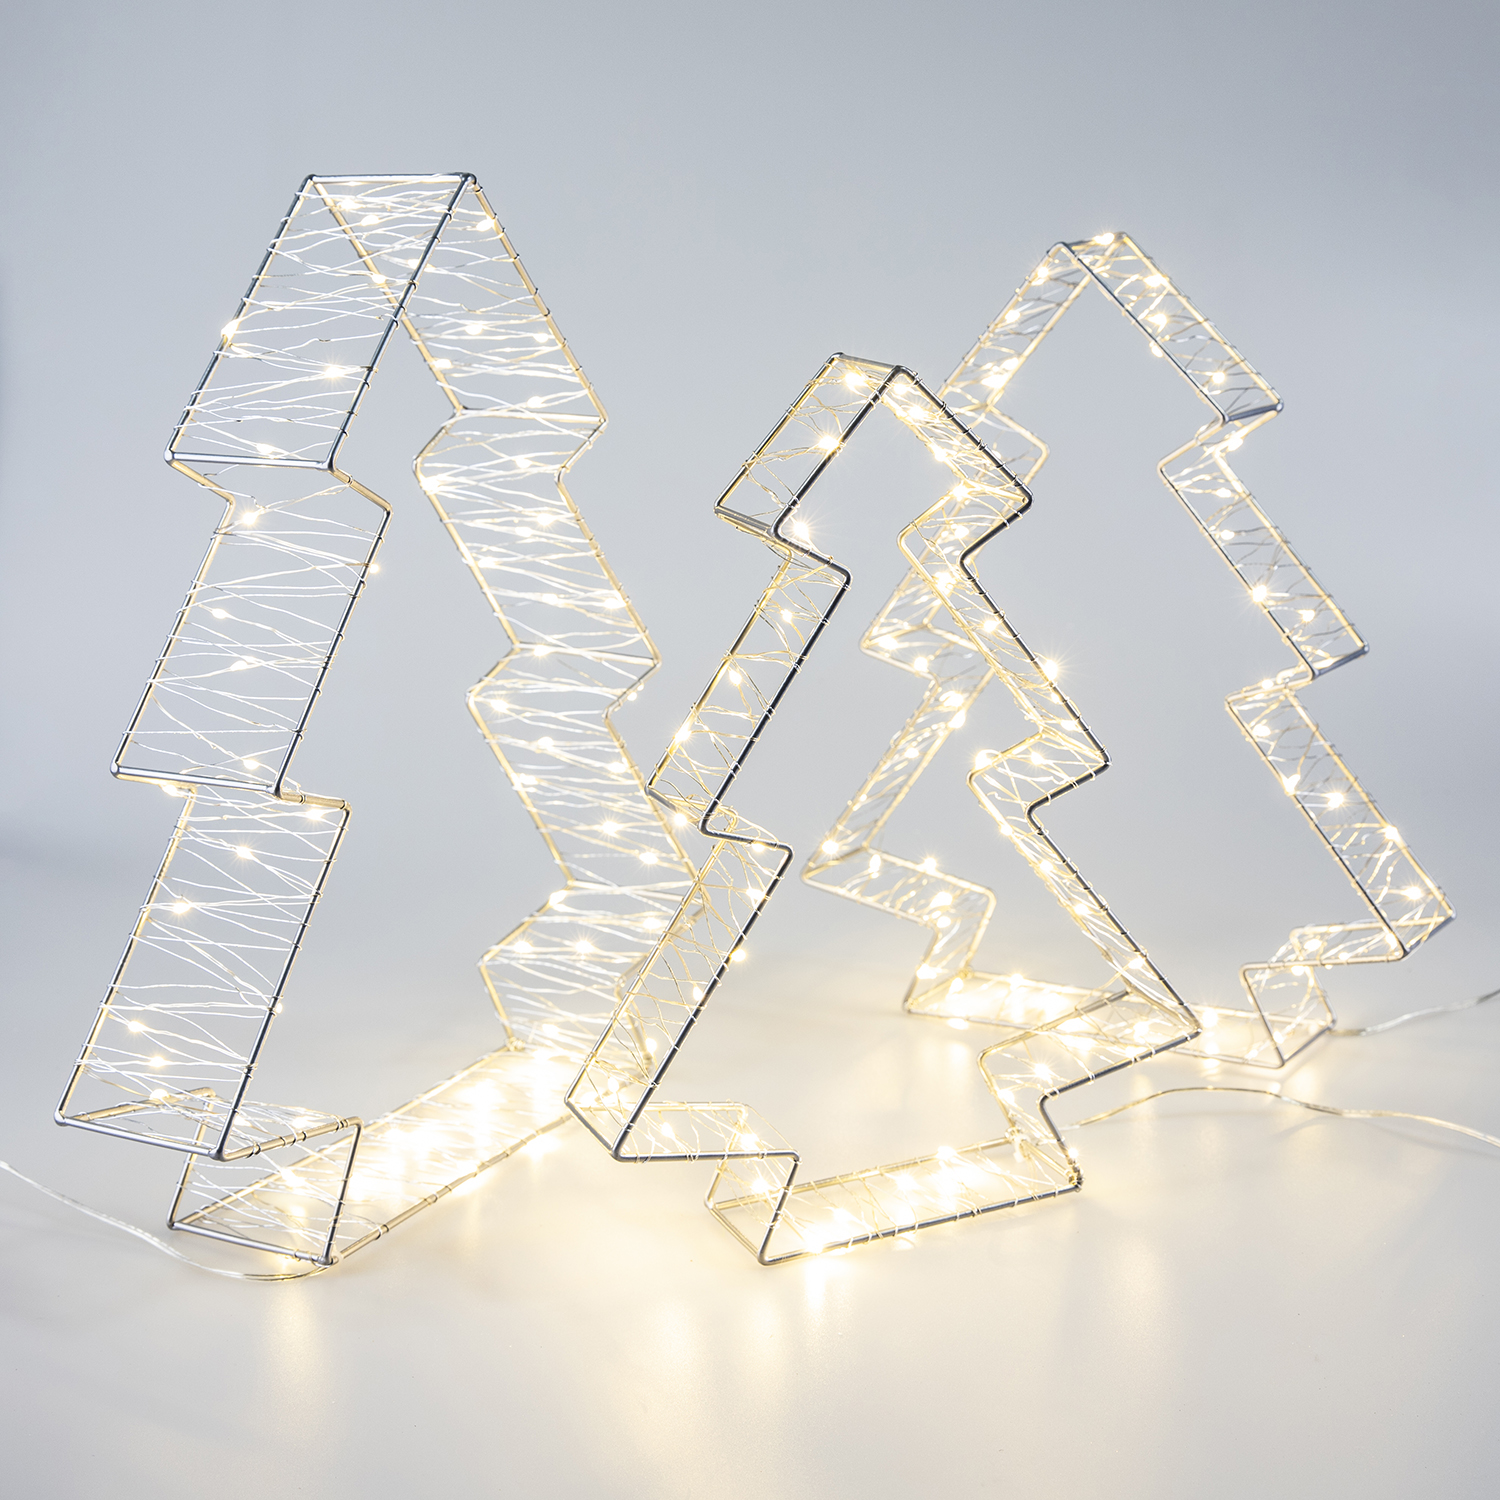 3D lighted Christmas Tree motifs